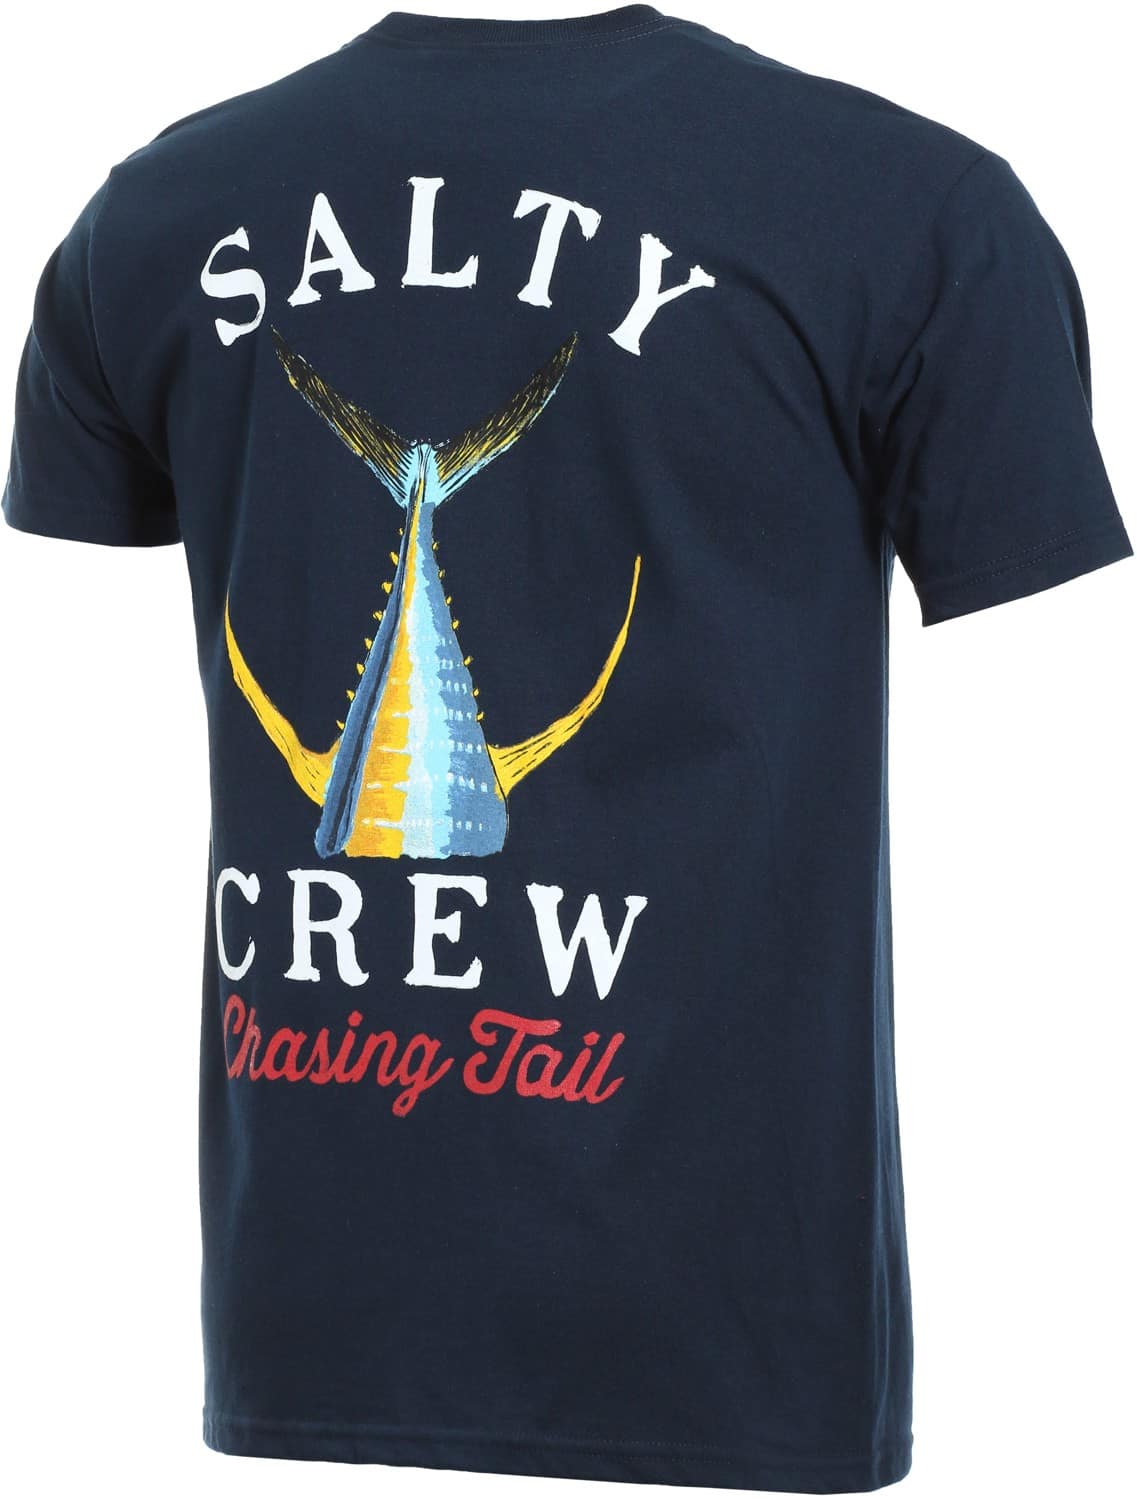 Salty Crew Tailed SS Tee  Navy XXXL